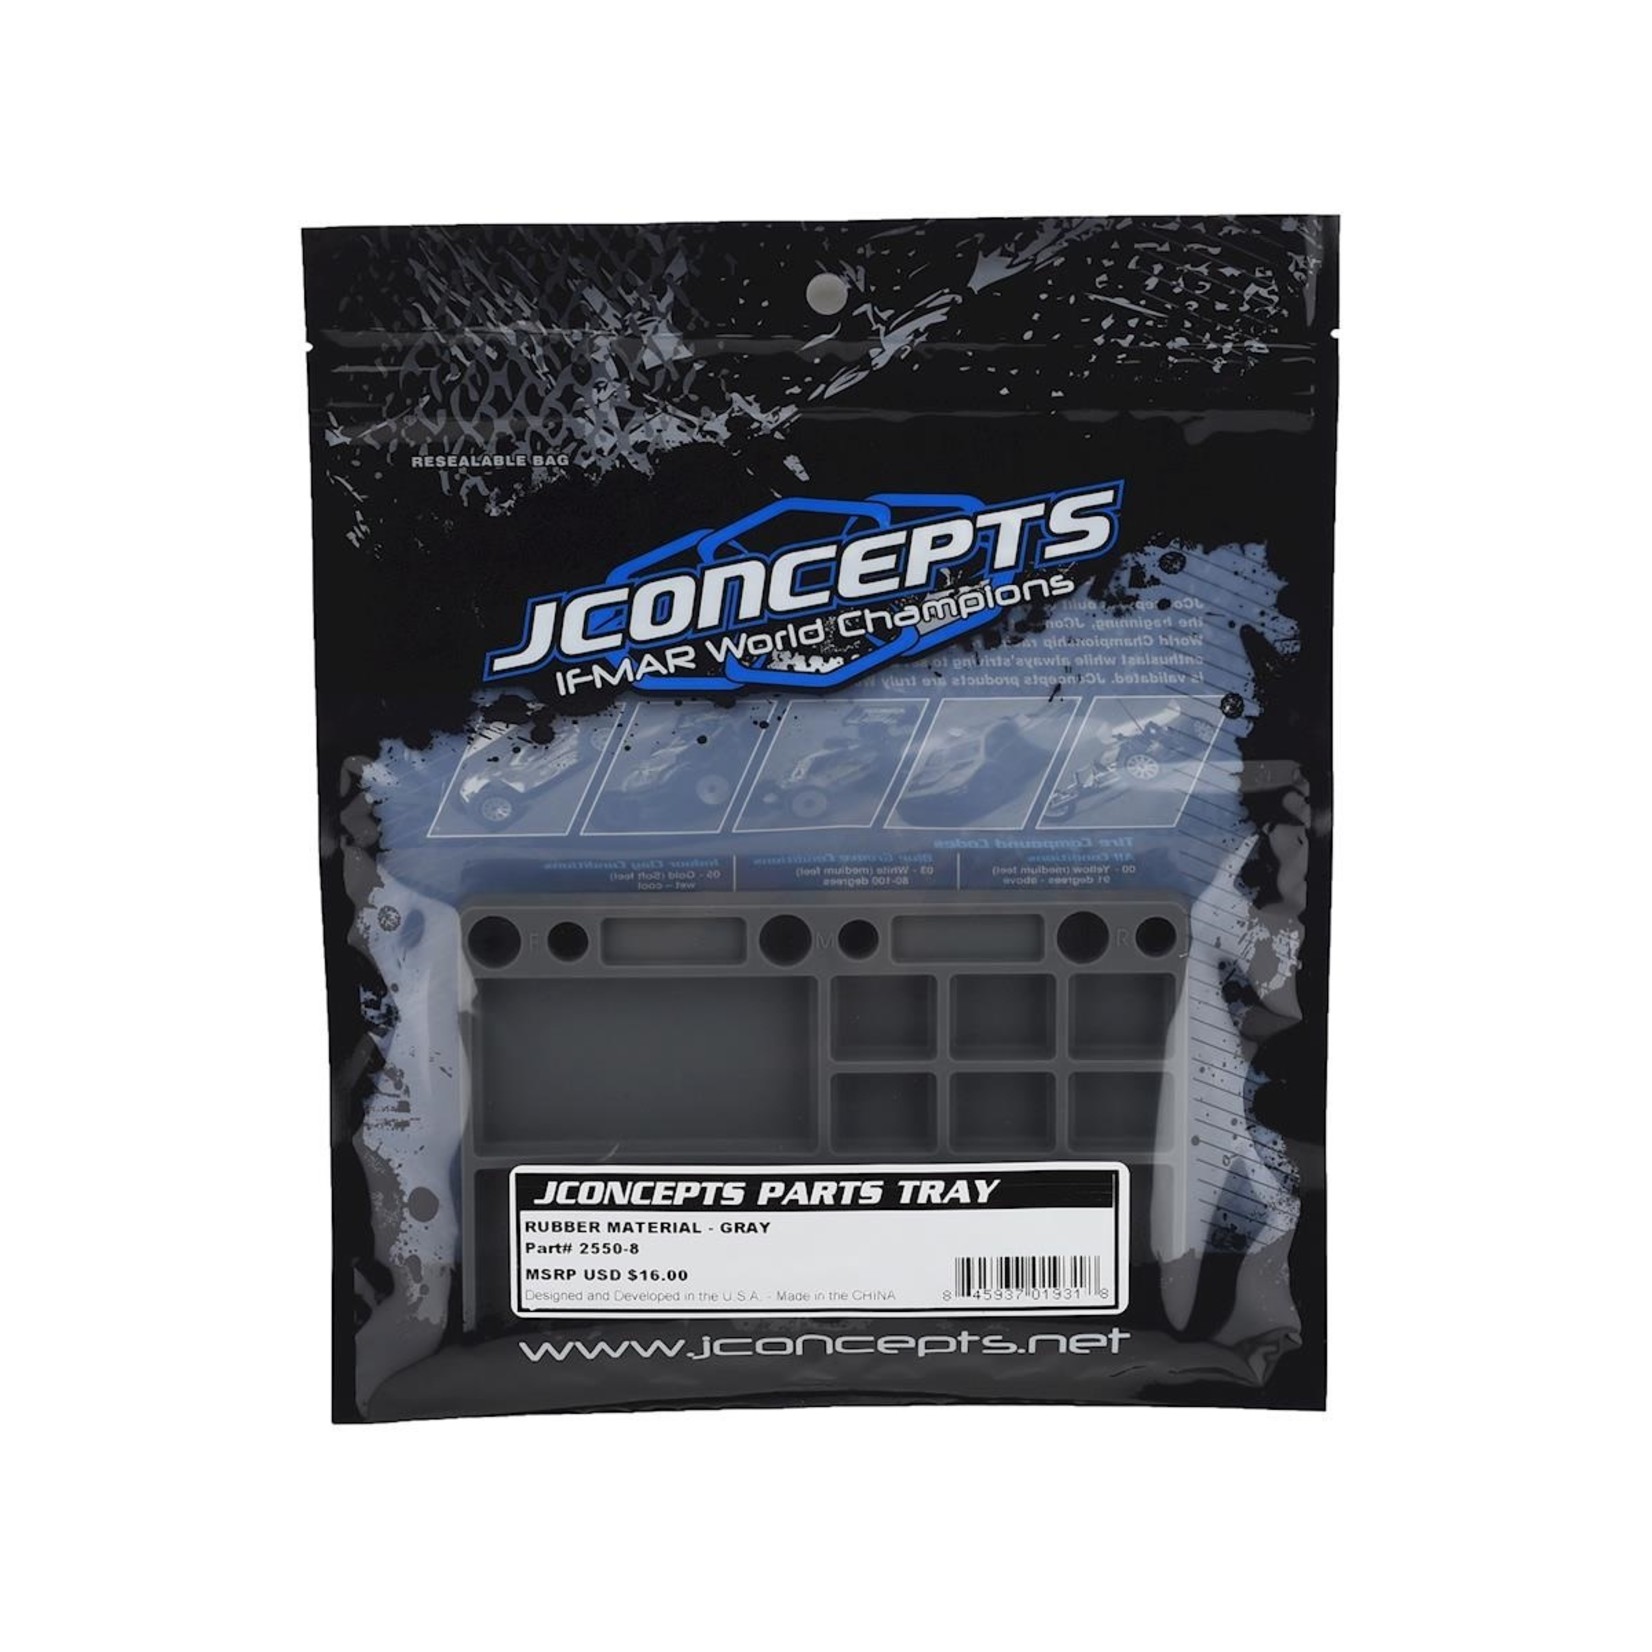 JConcepts JConcepts Rubber Parts Tray (Grey) #2550-8